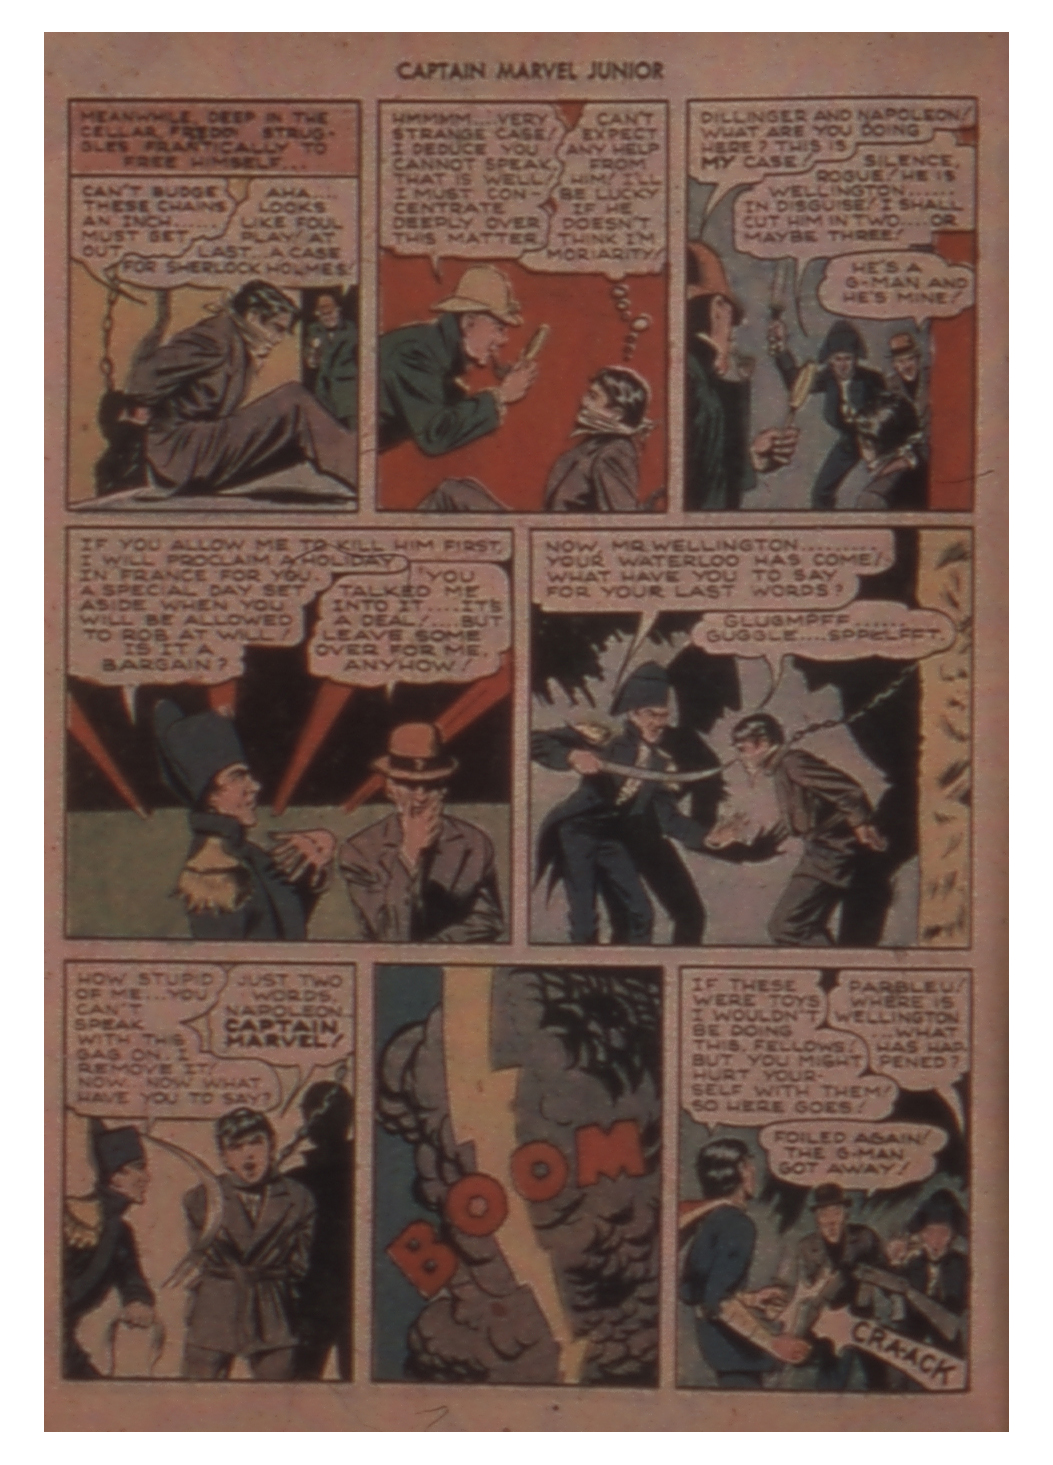 Read online Captain Marvel, Jr. comic -  Issue #32 - 20